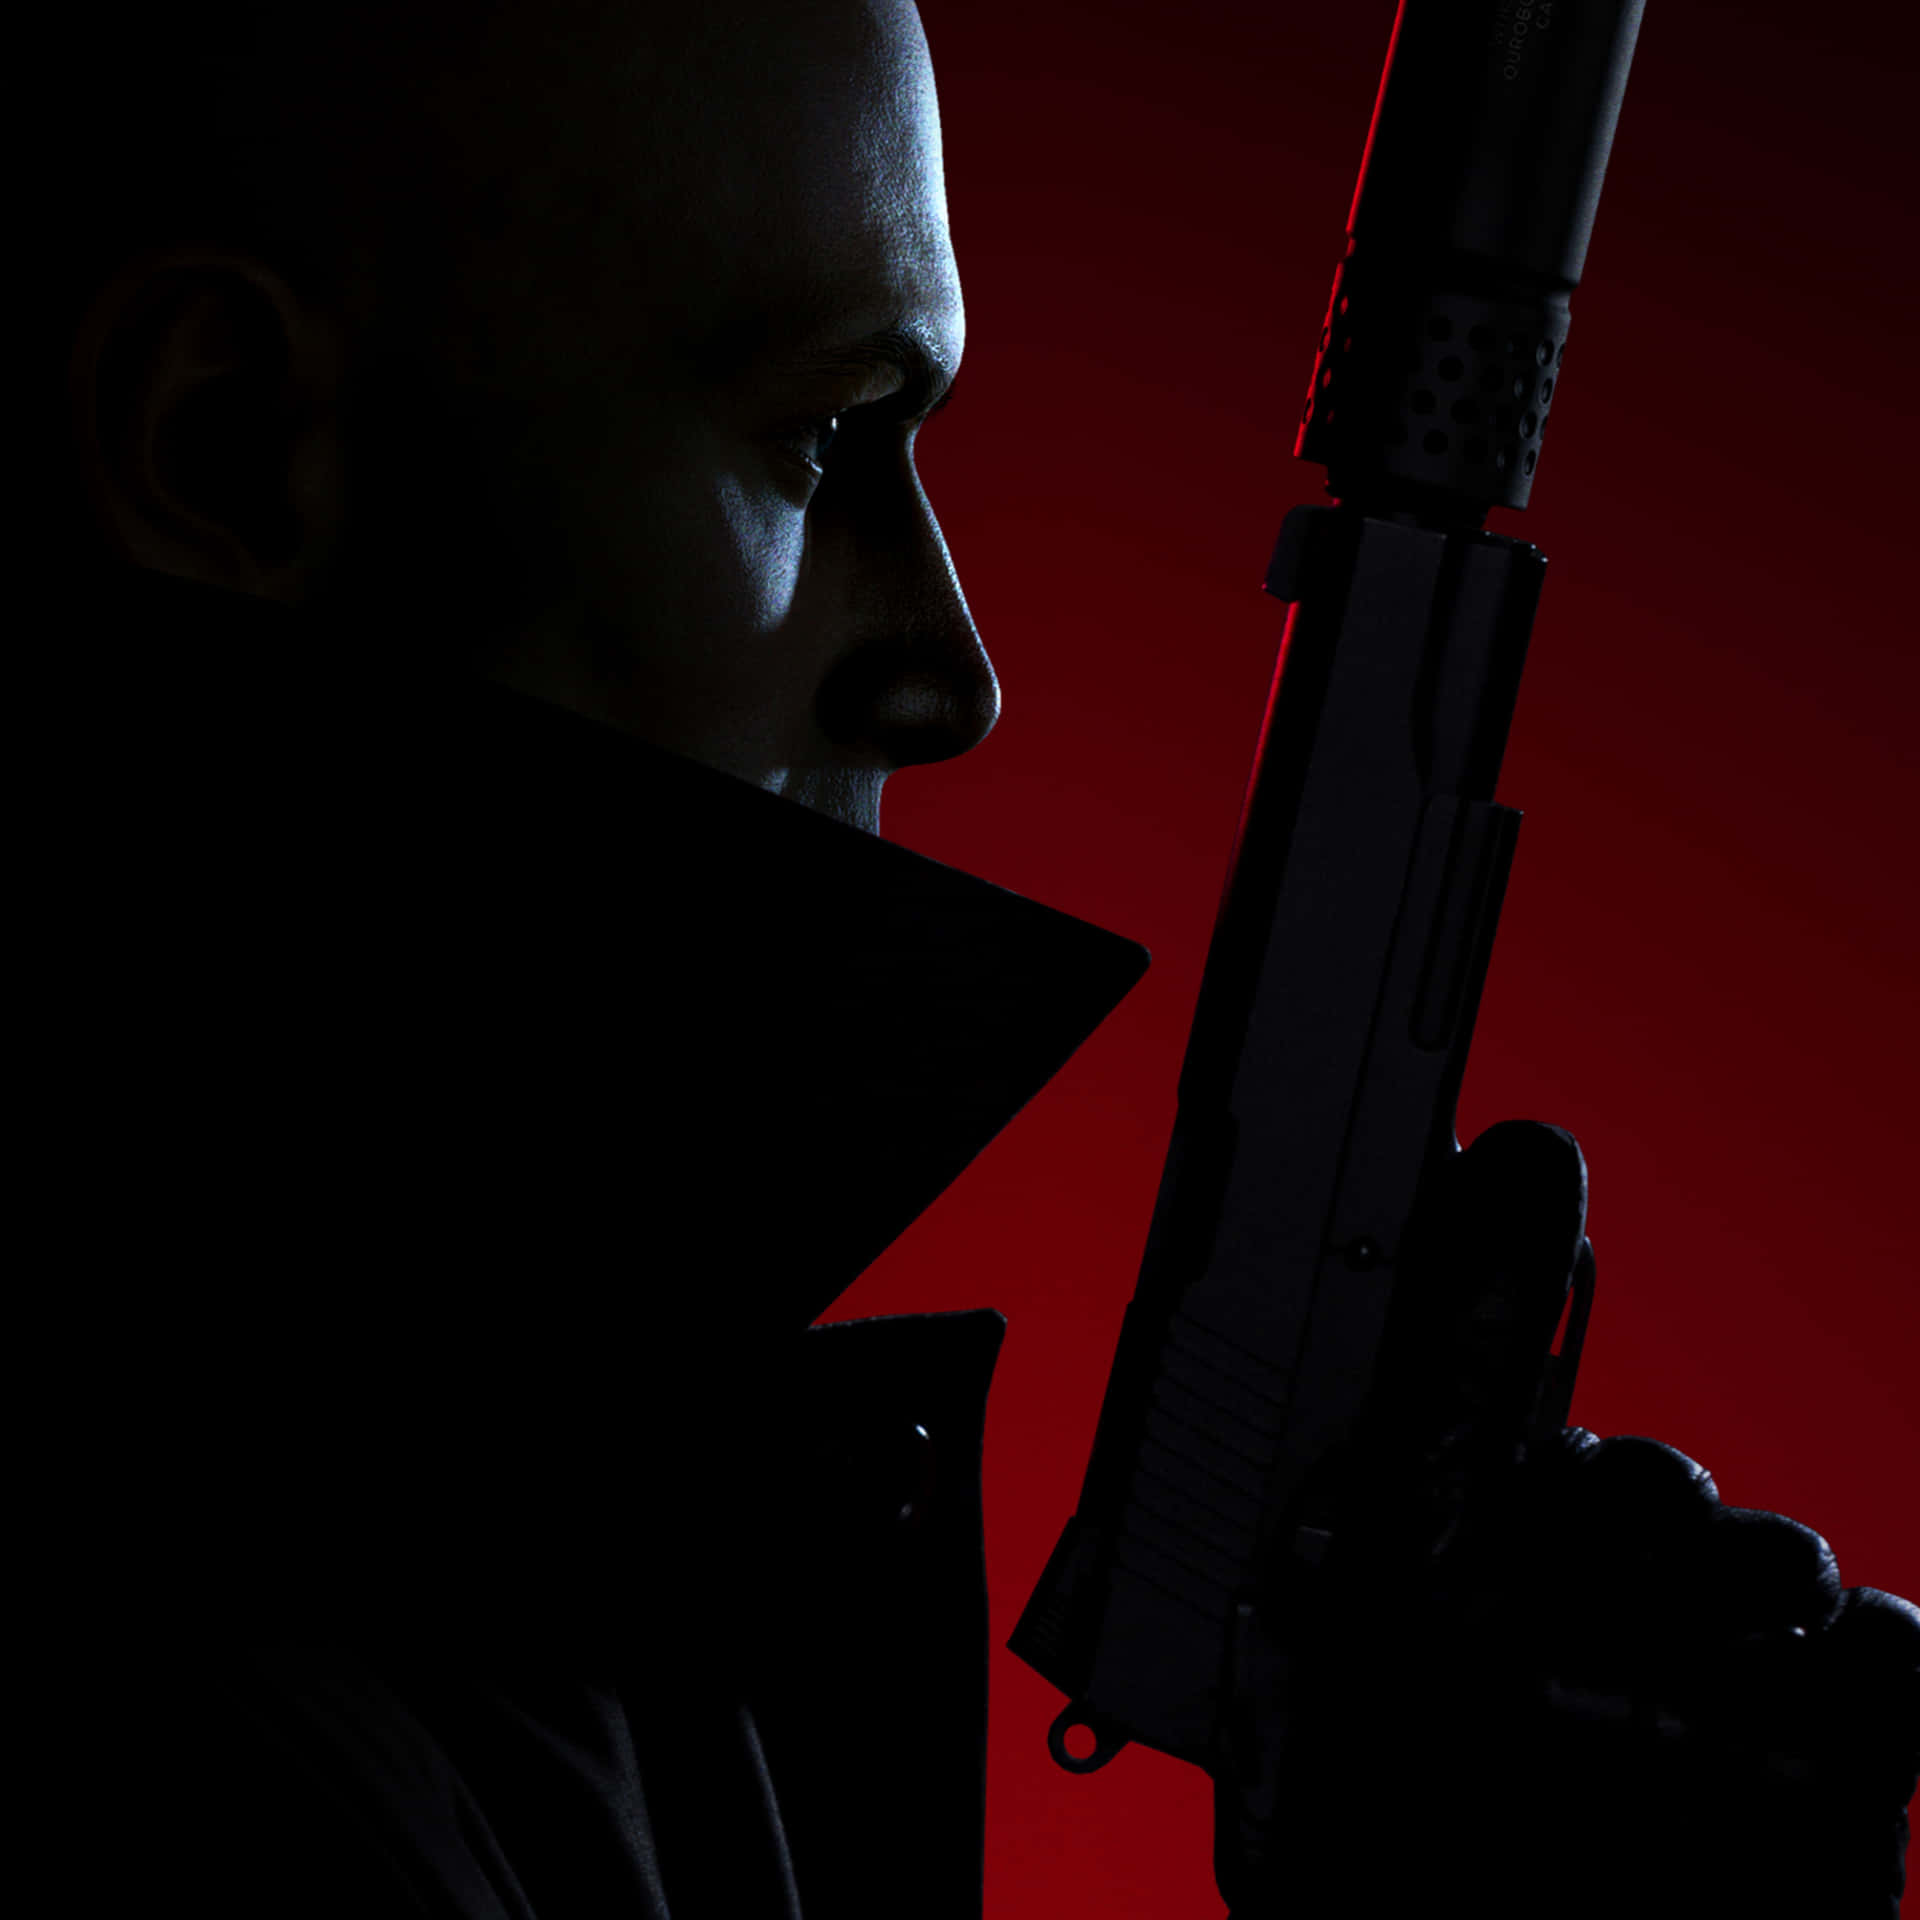 Hitman 3 Agent 47 Pistol With A Silencer Wallpaper